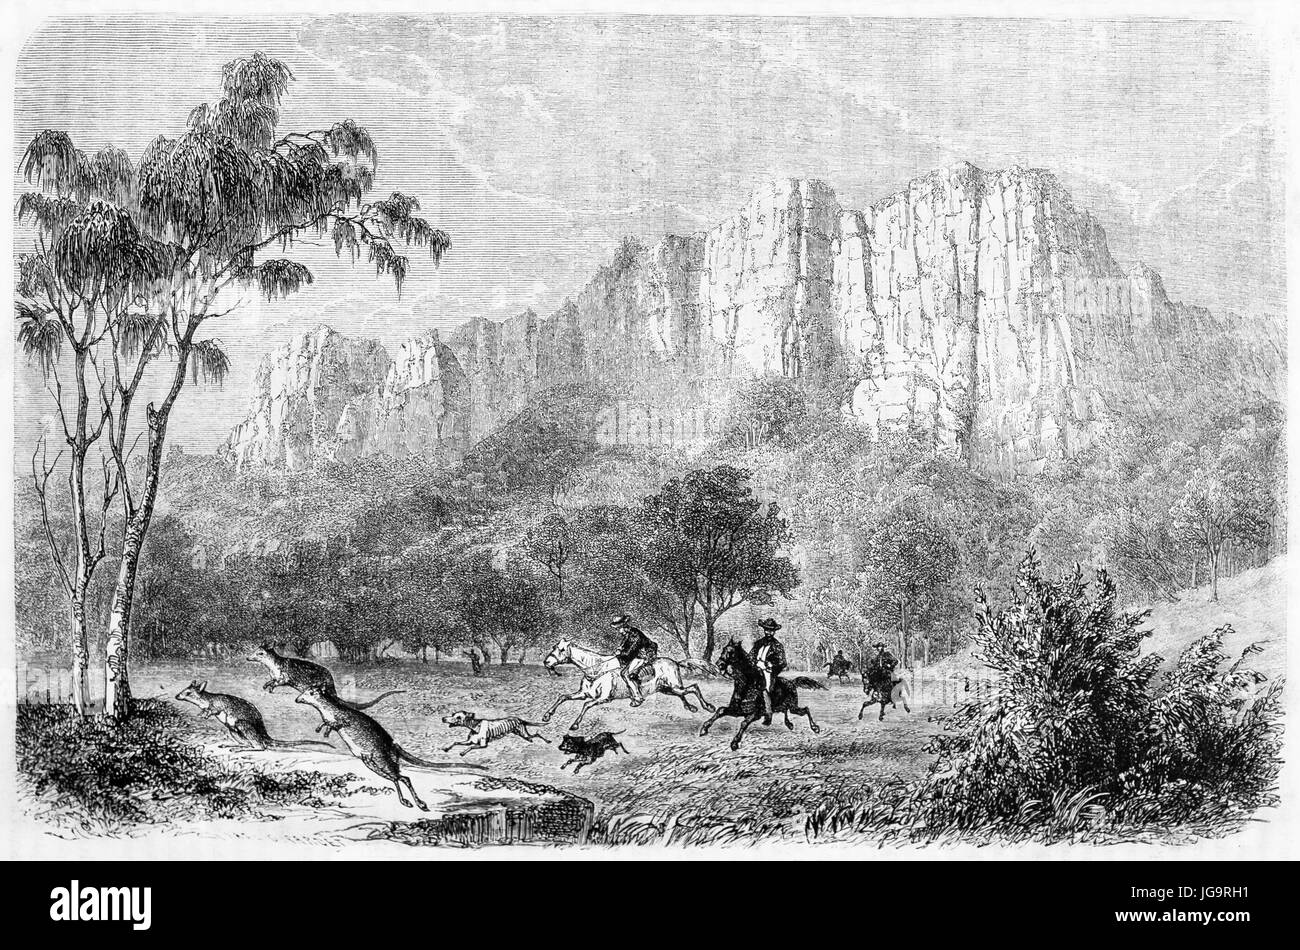 Old illustration of Kangaroo hunting, Australia. Created by Girardet, after Castella's album, published on Le Tour du Monde, Paris, 1861 Stock Photo